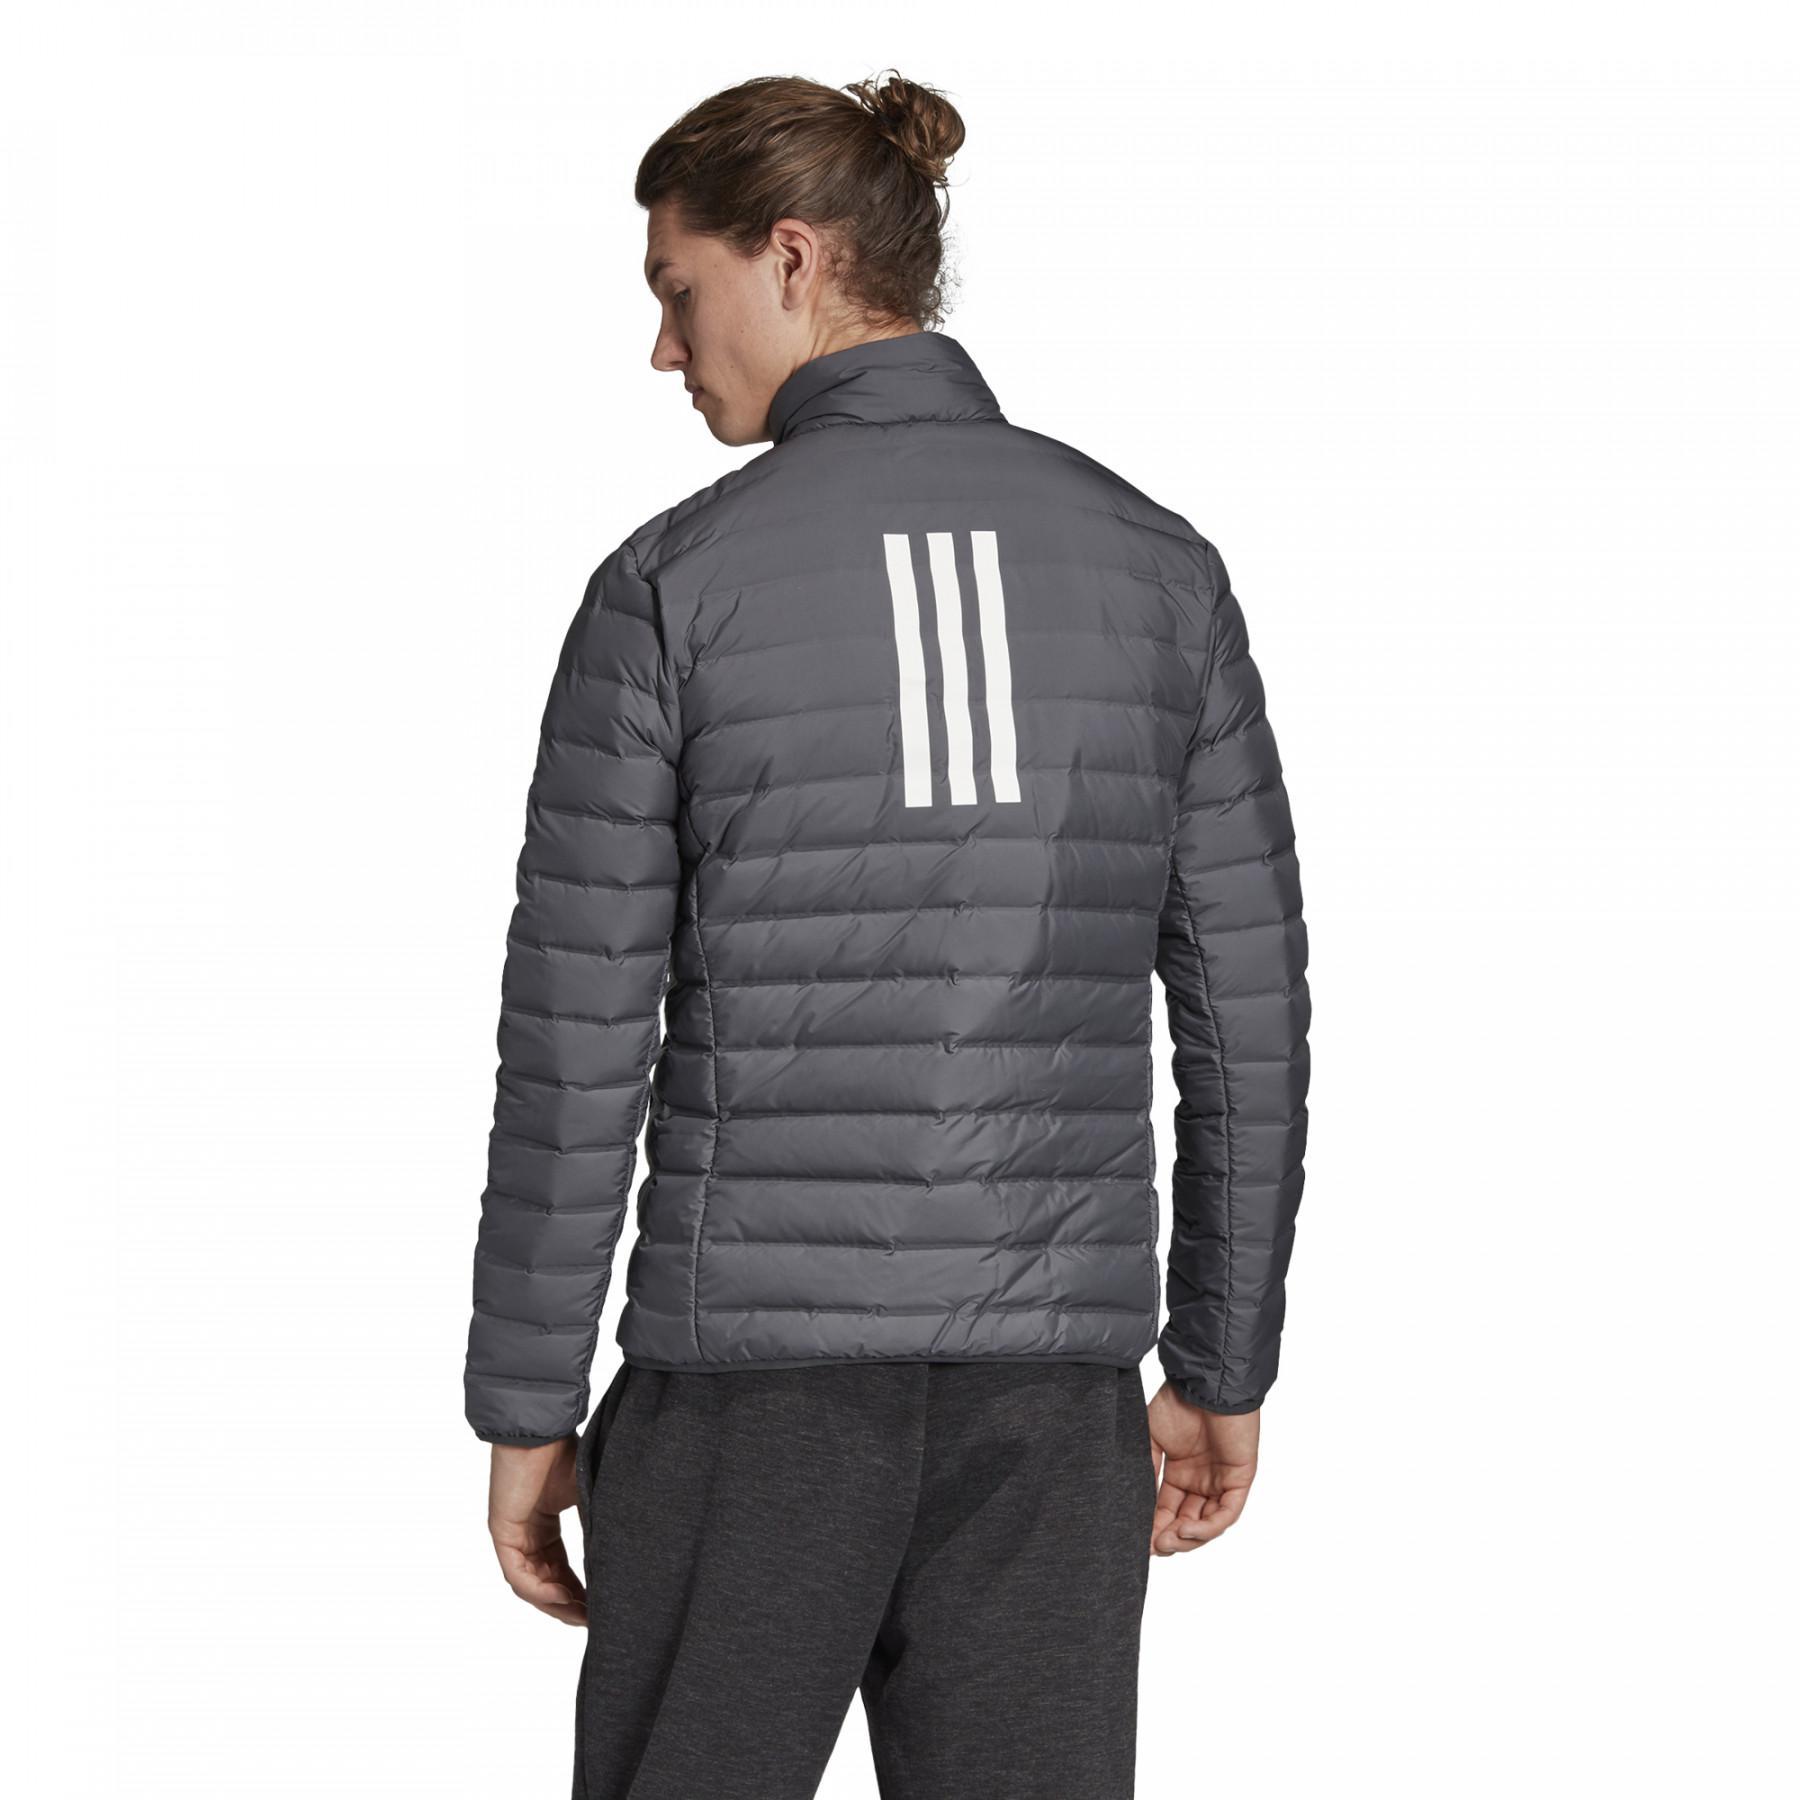 Training jacket adidas Varililte 3-Stripes Soft Down